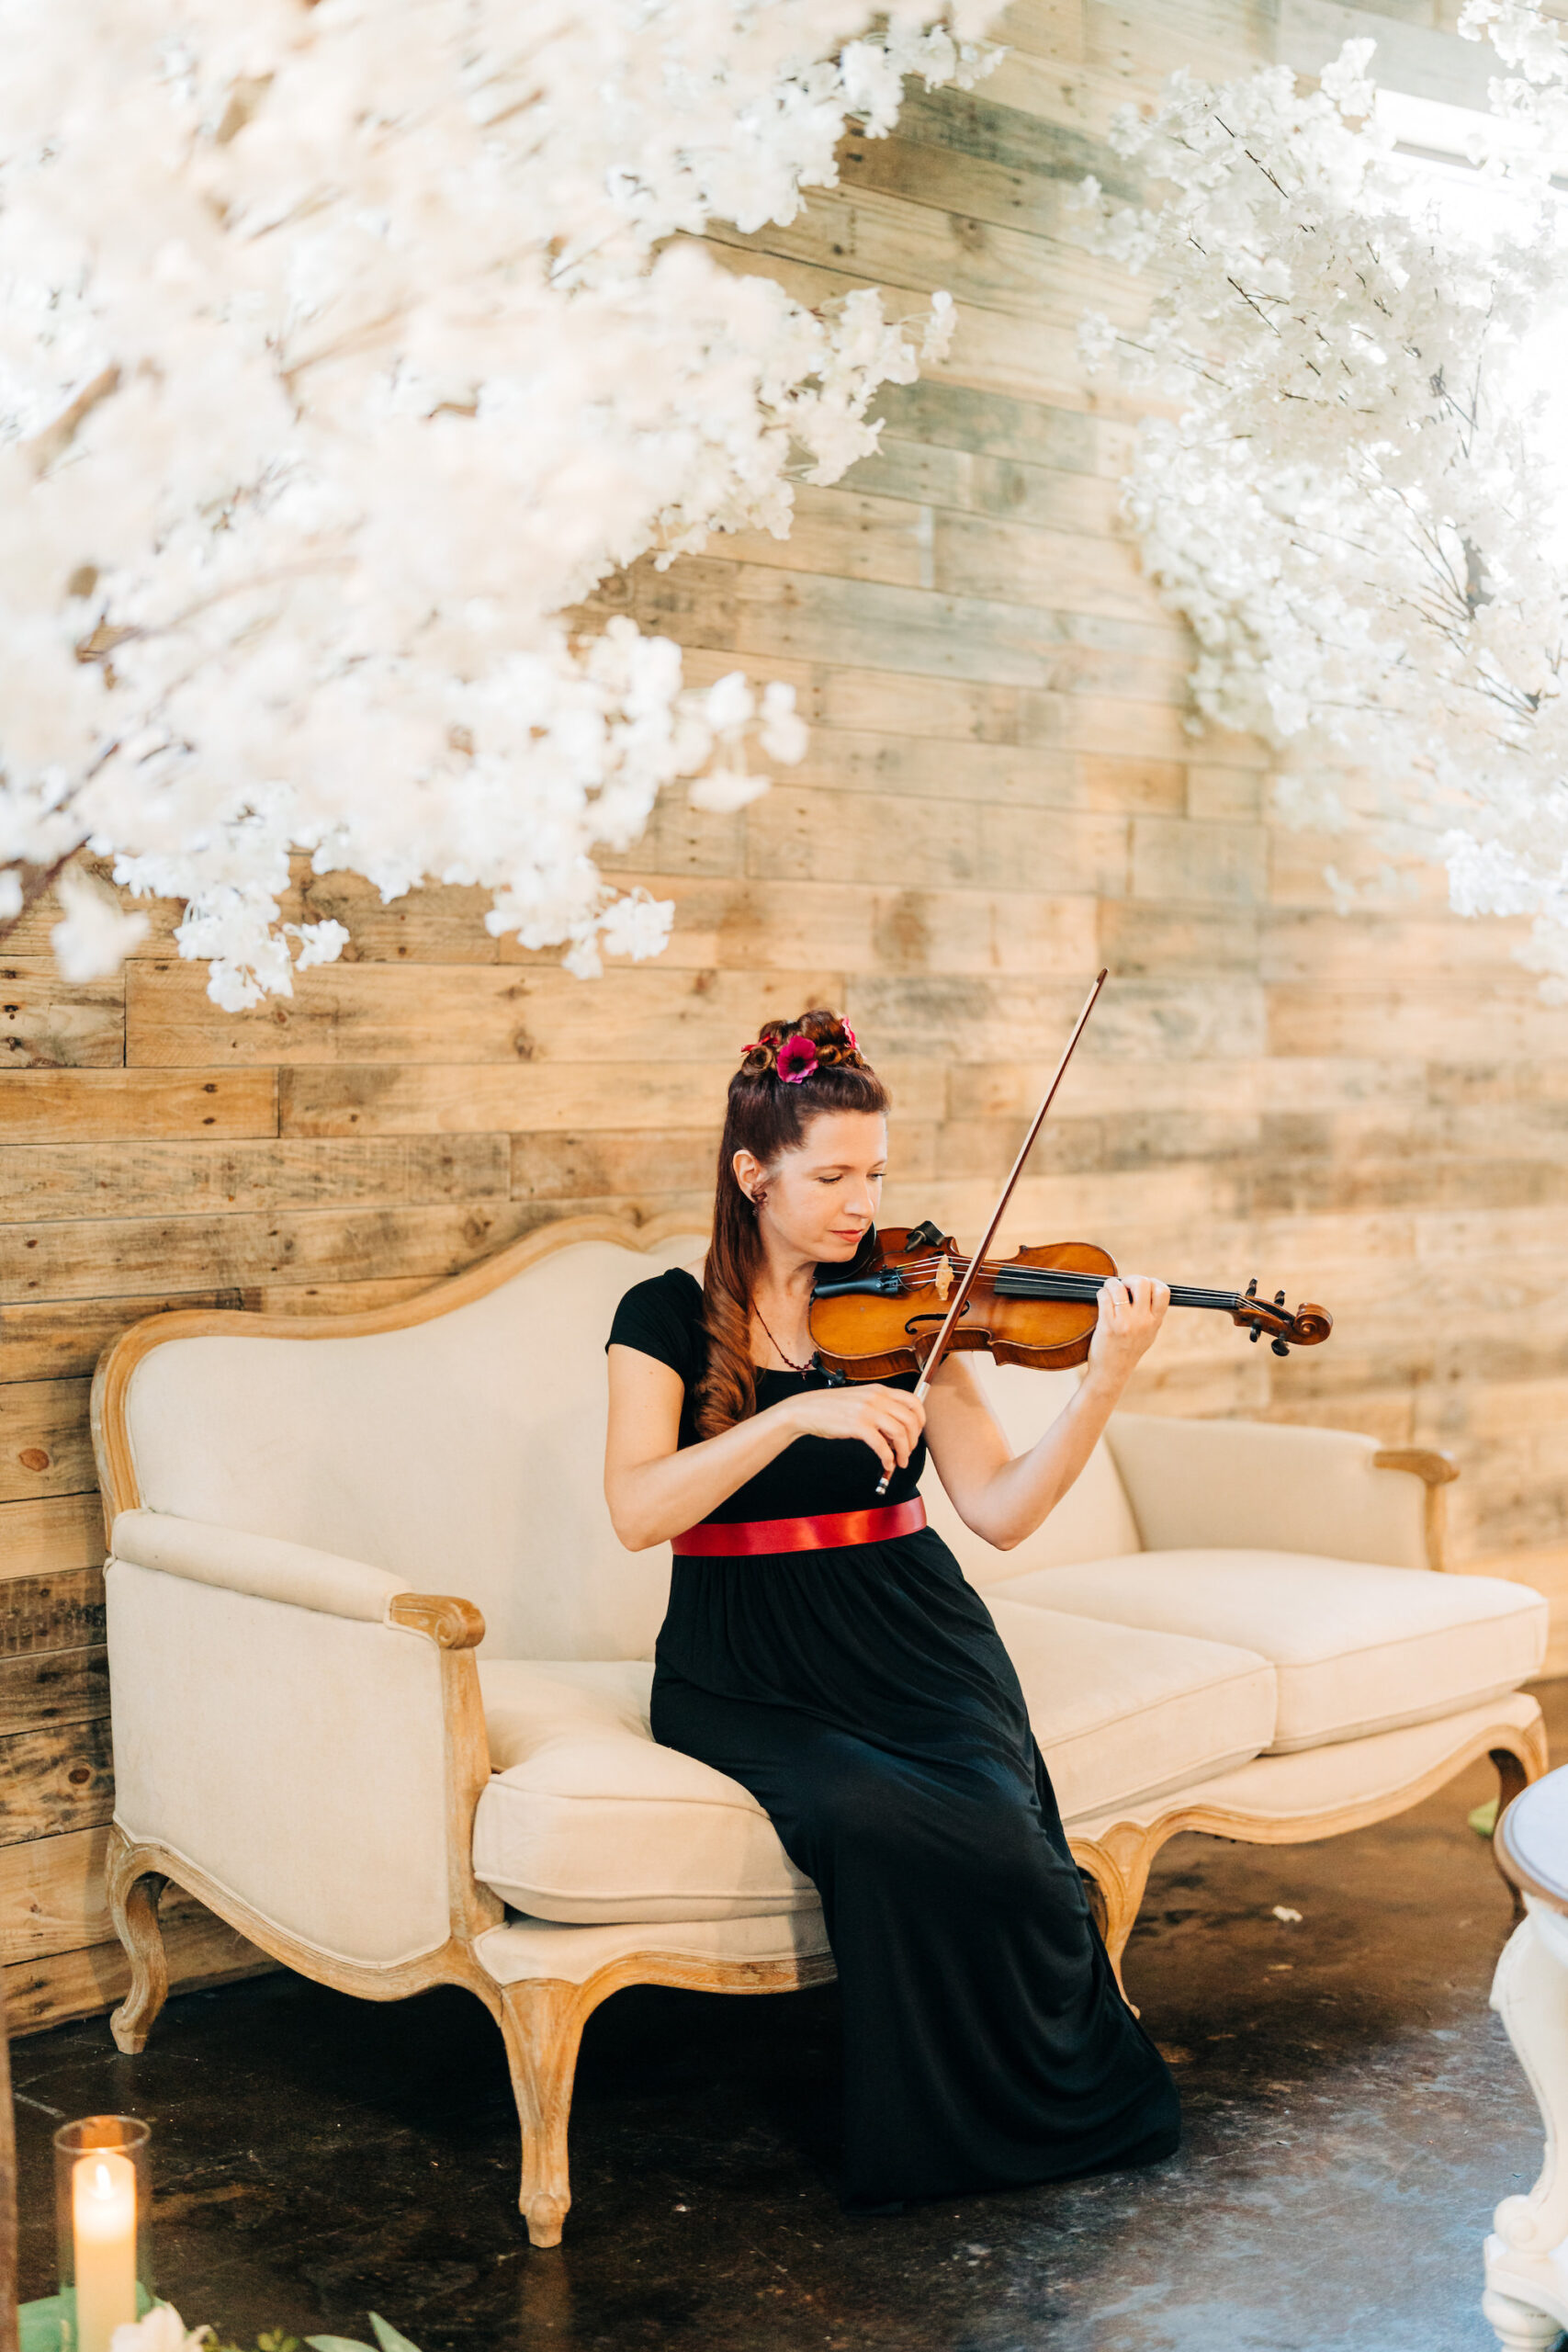 Violinist Live Music Wedding Reception Entertainment Ideas | Rentals Gabro Events